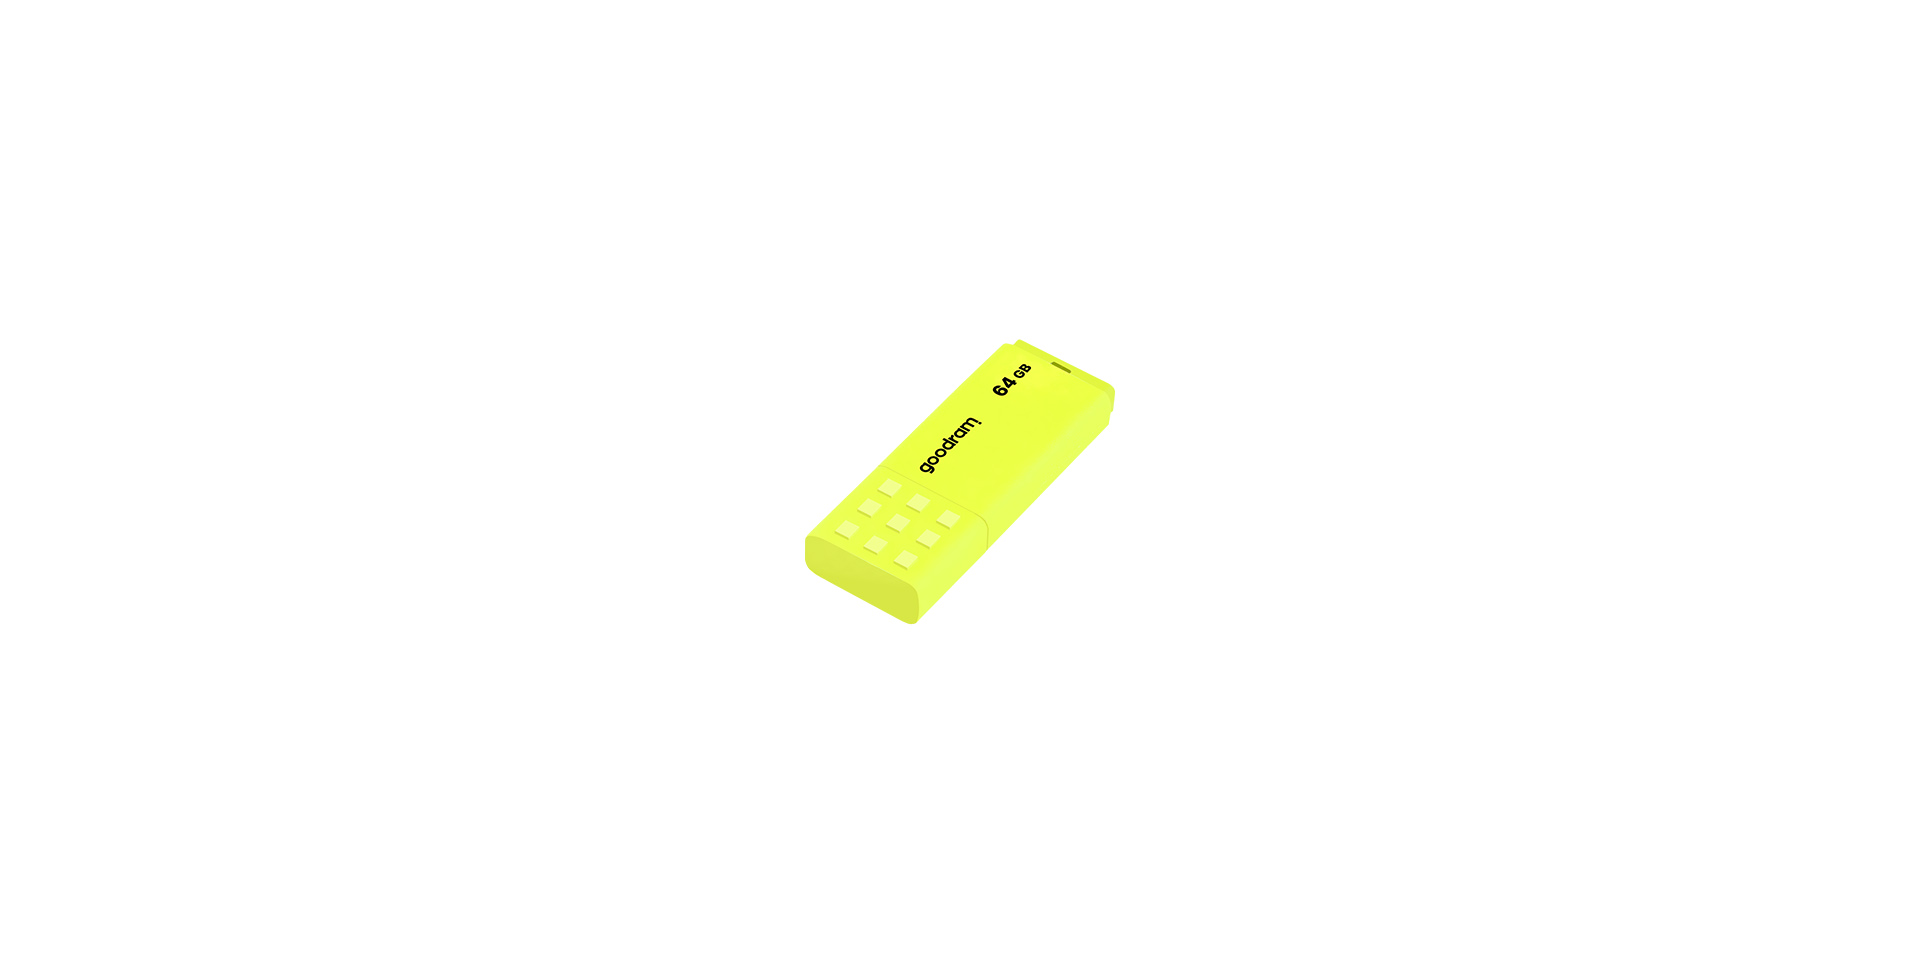 64GB USB 2.0 Yellow - UME2